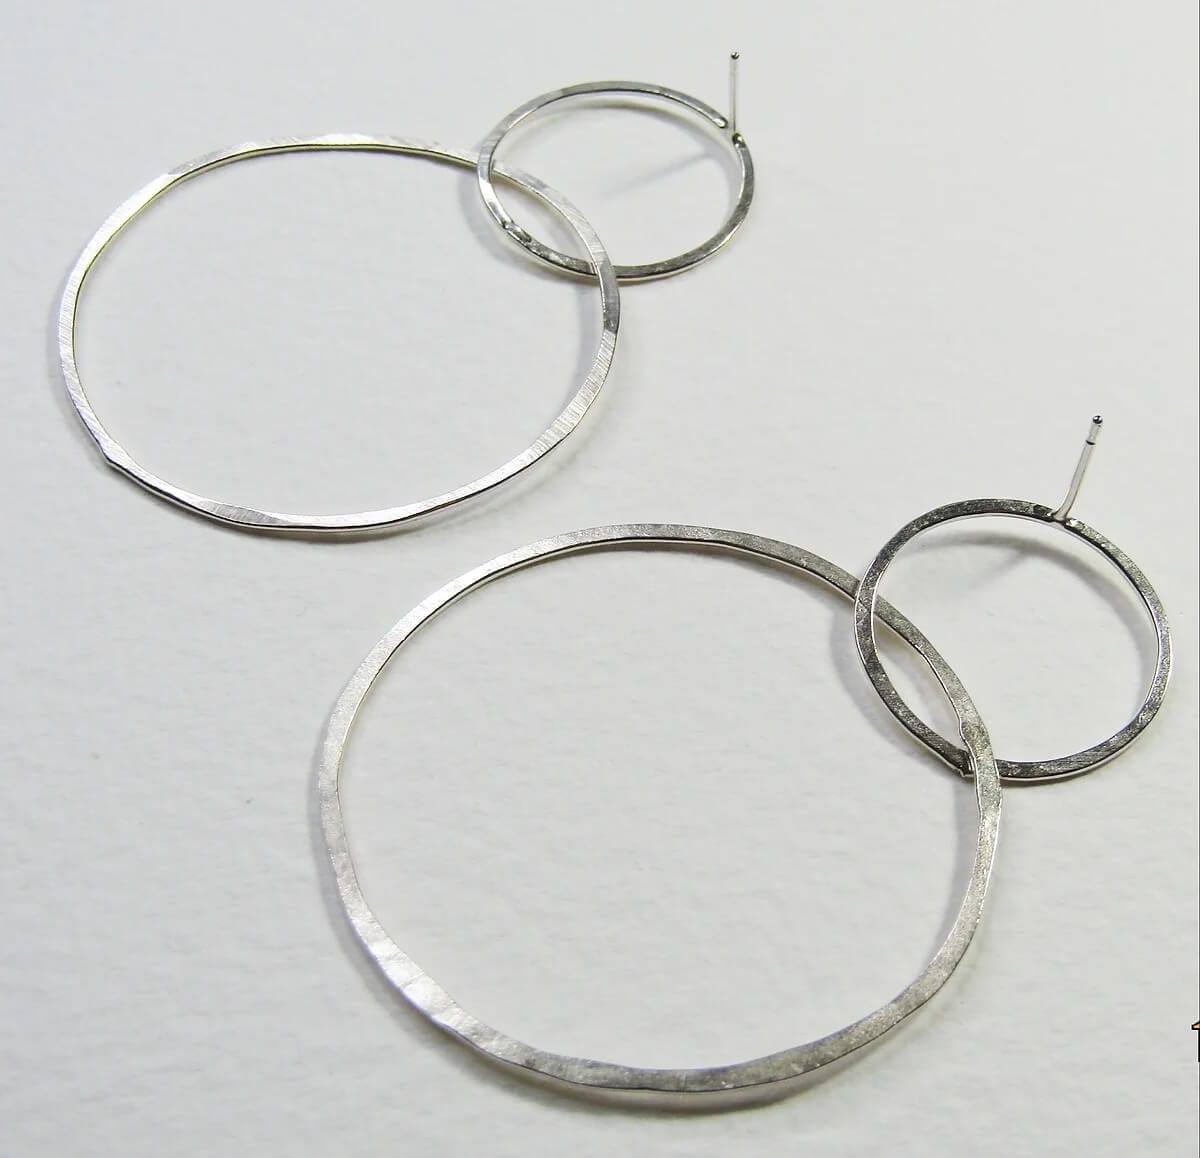 Amelia Stone Jewellery Earrings 'Linked Hoops' Studs - Sterling Silver  (two sizes)